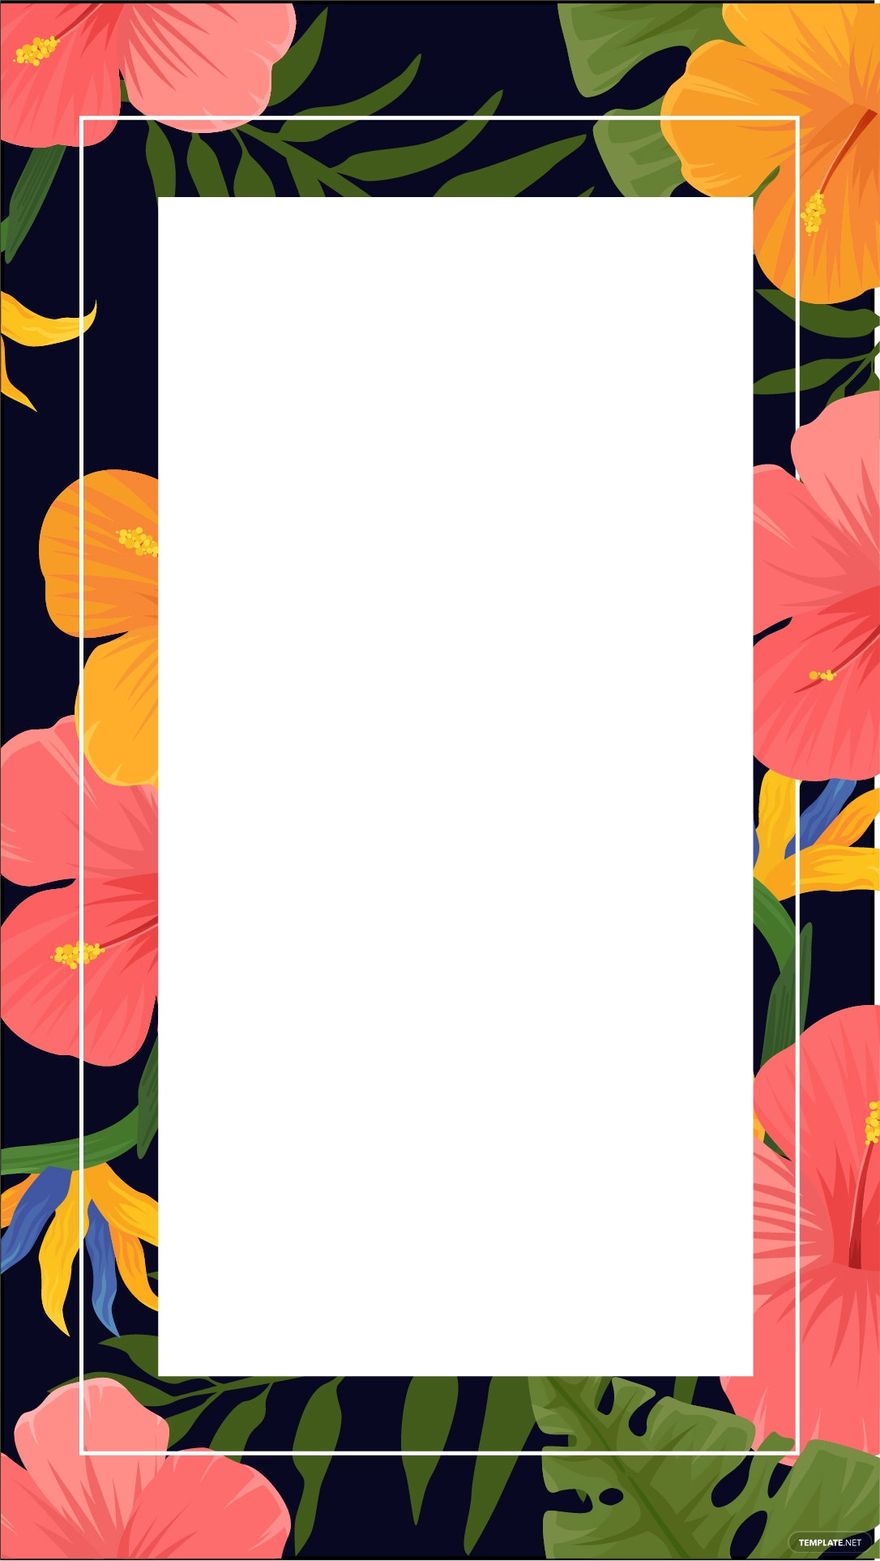 Free Tropical Invitation Floral Background in Illustrator, EPS, SVG, JPG